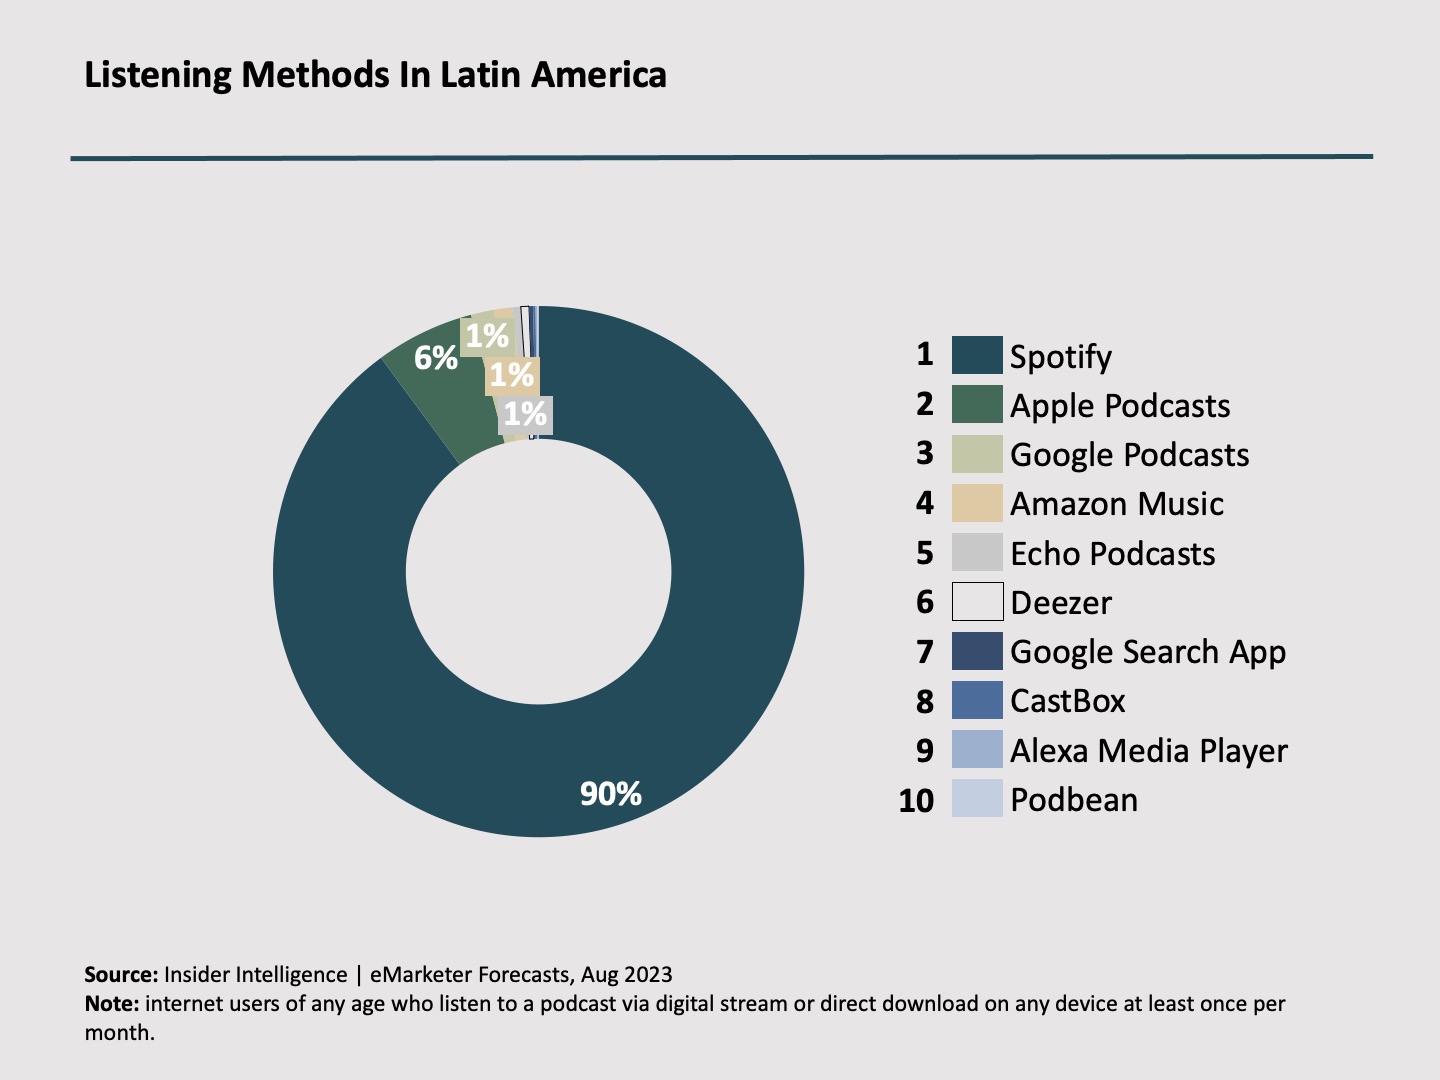 Listening methods in Latin America